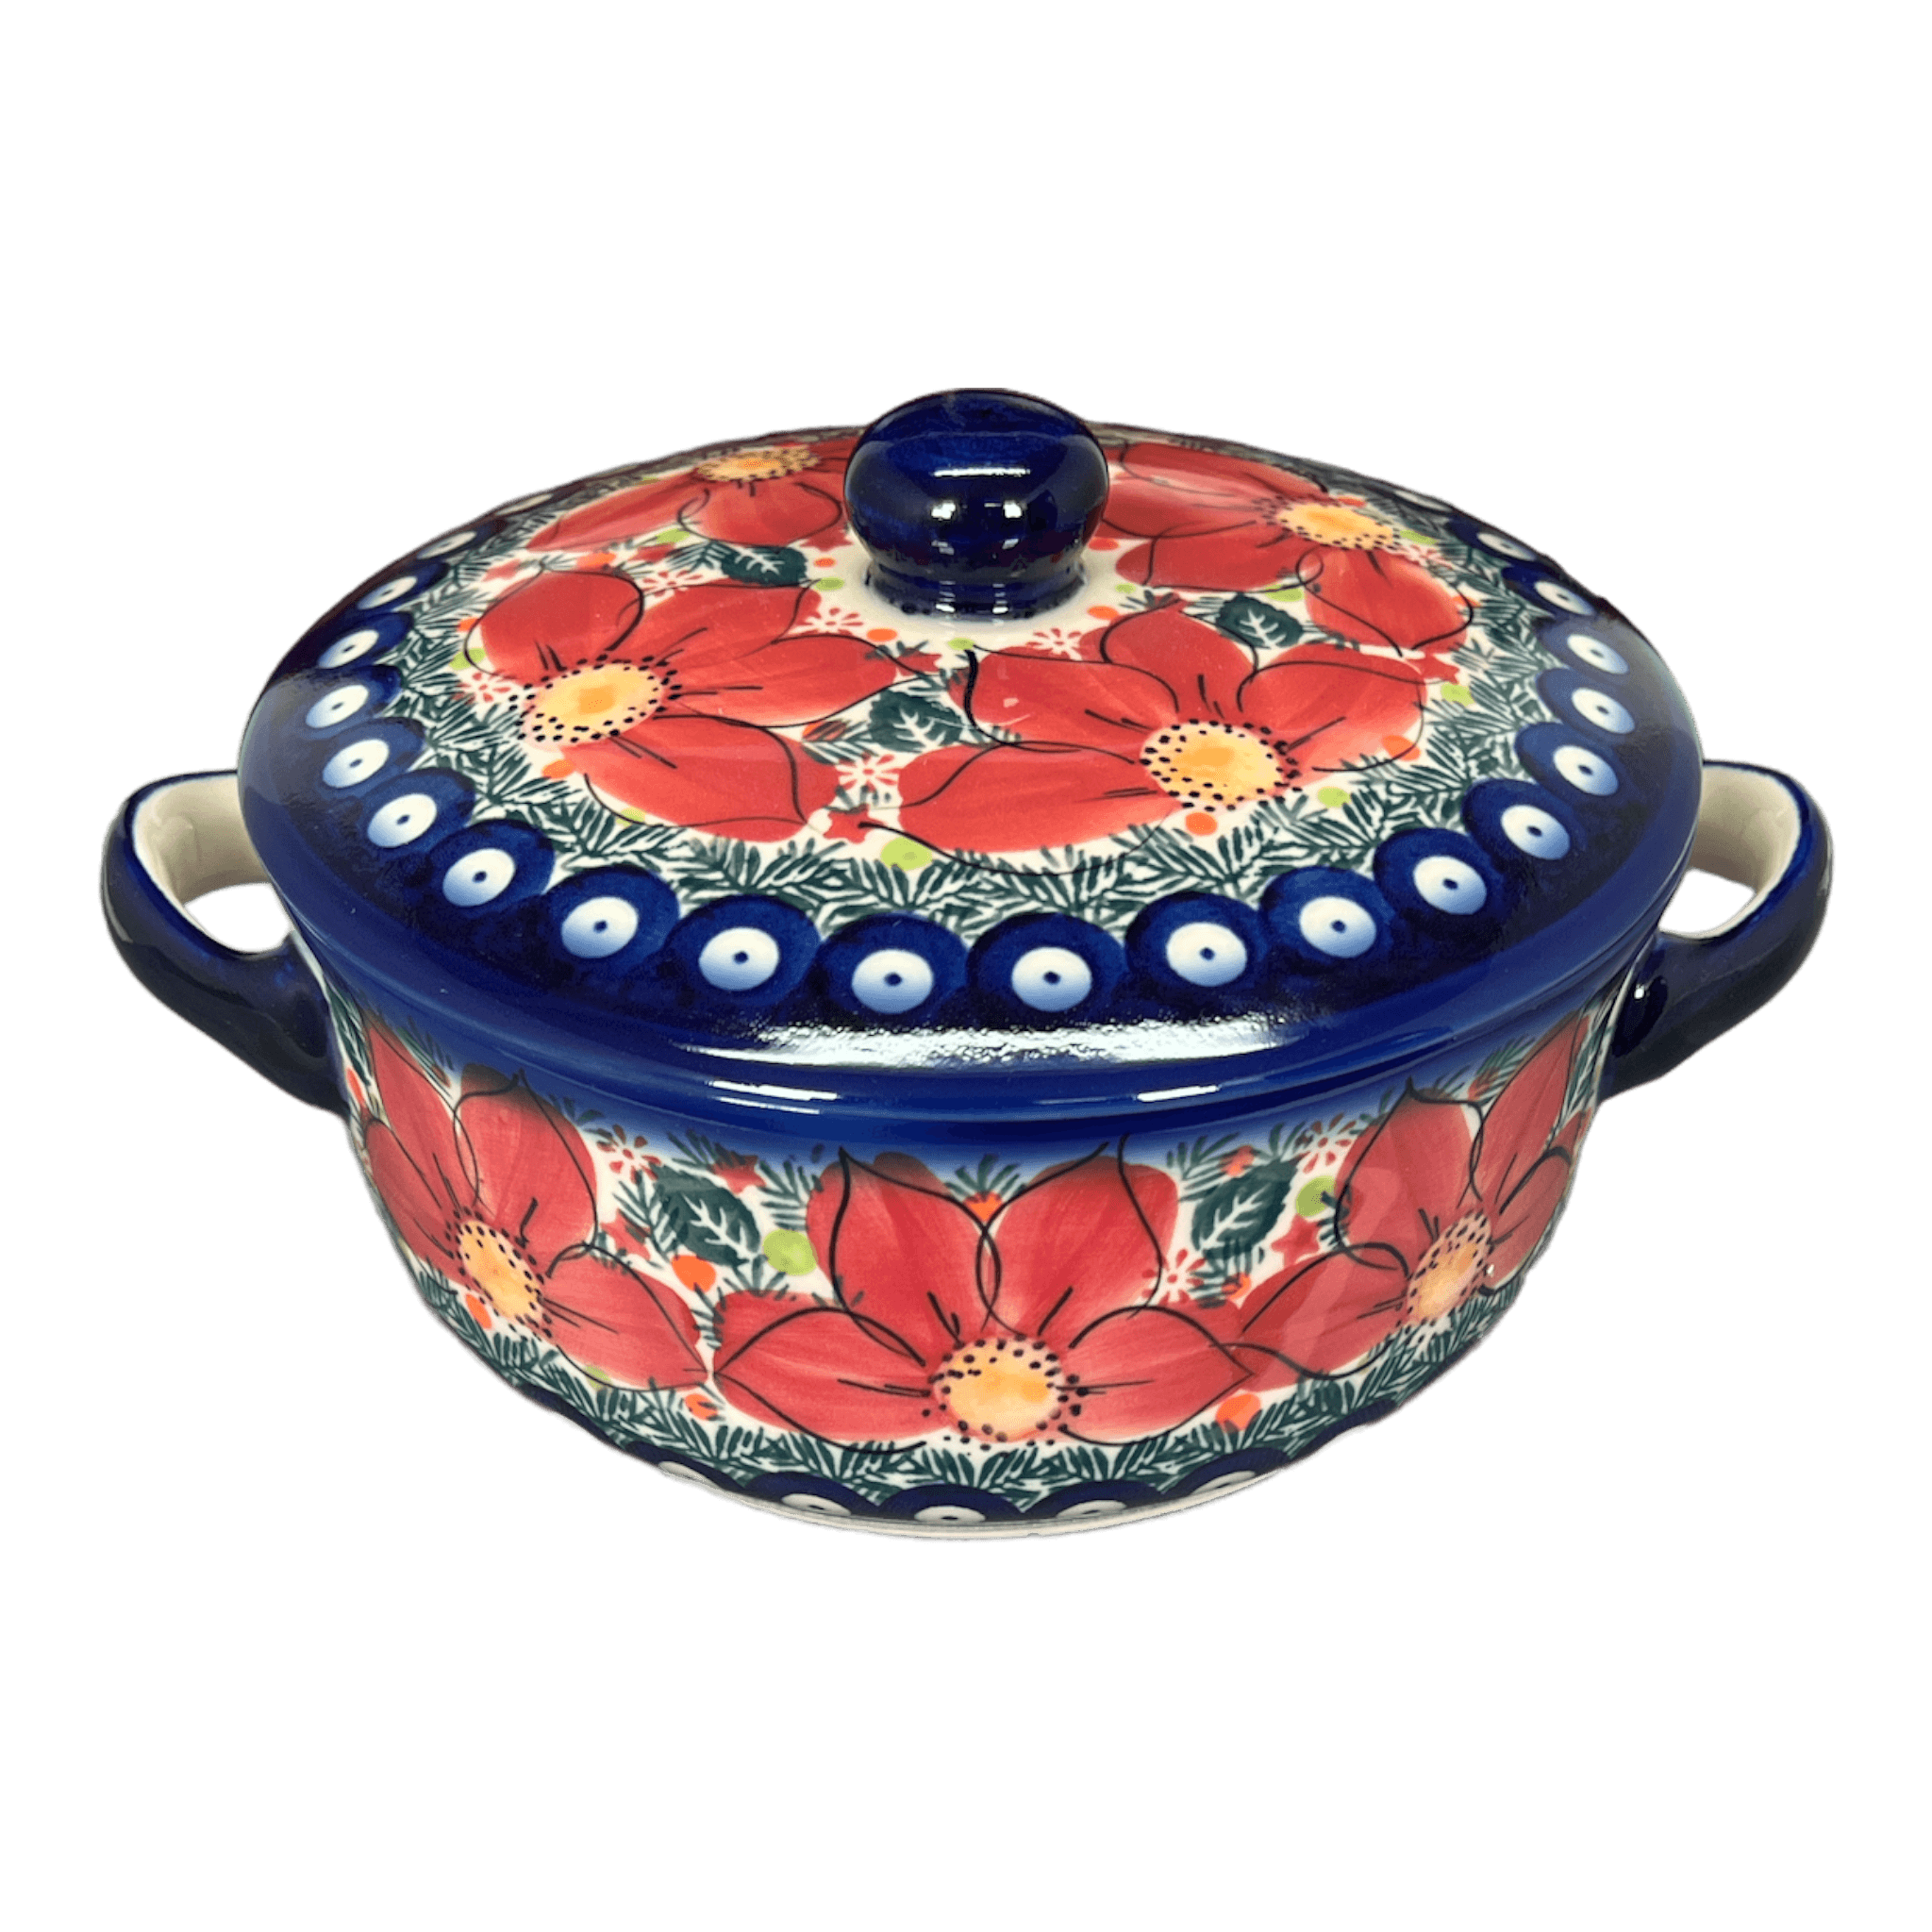 Lidded Round Ceramic Casserole Dish